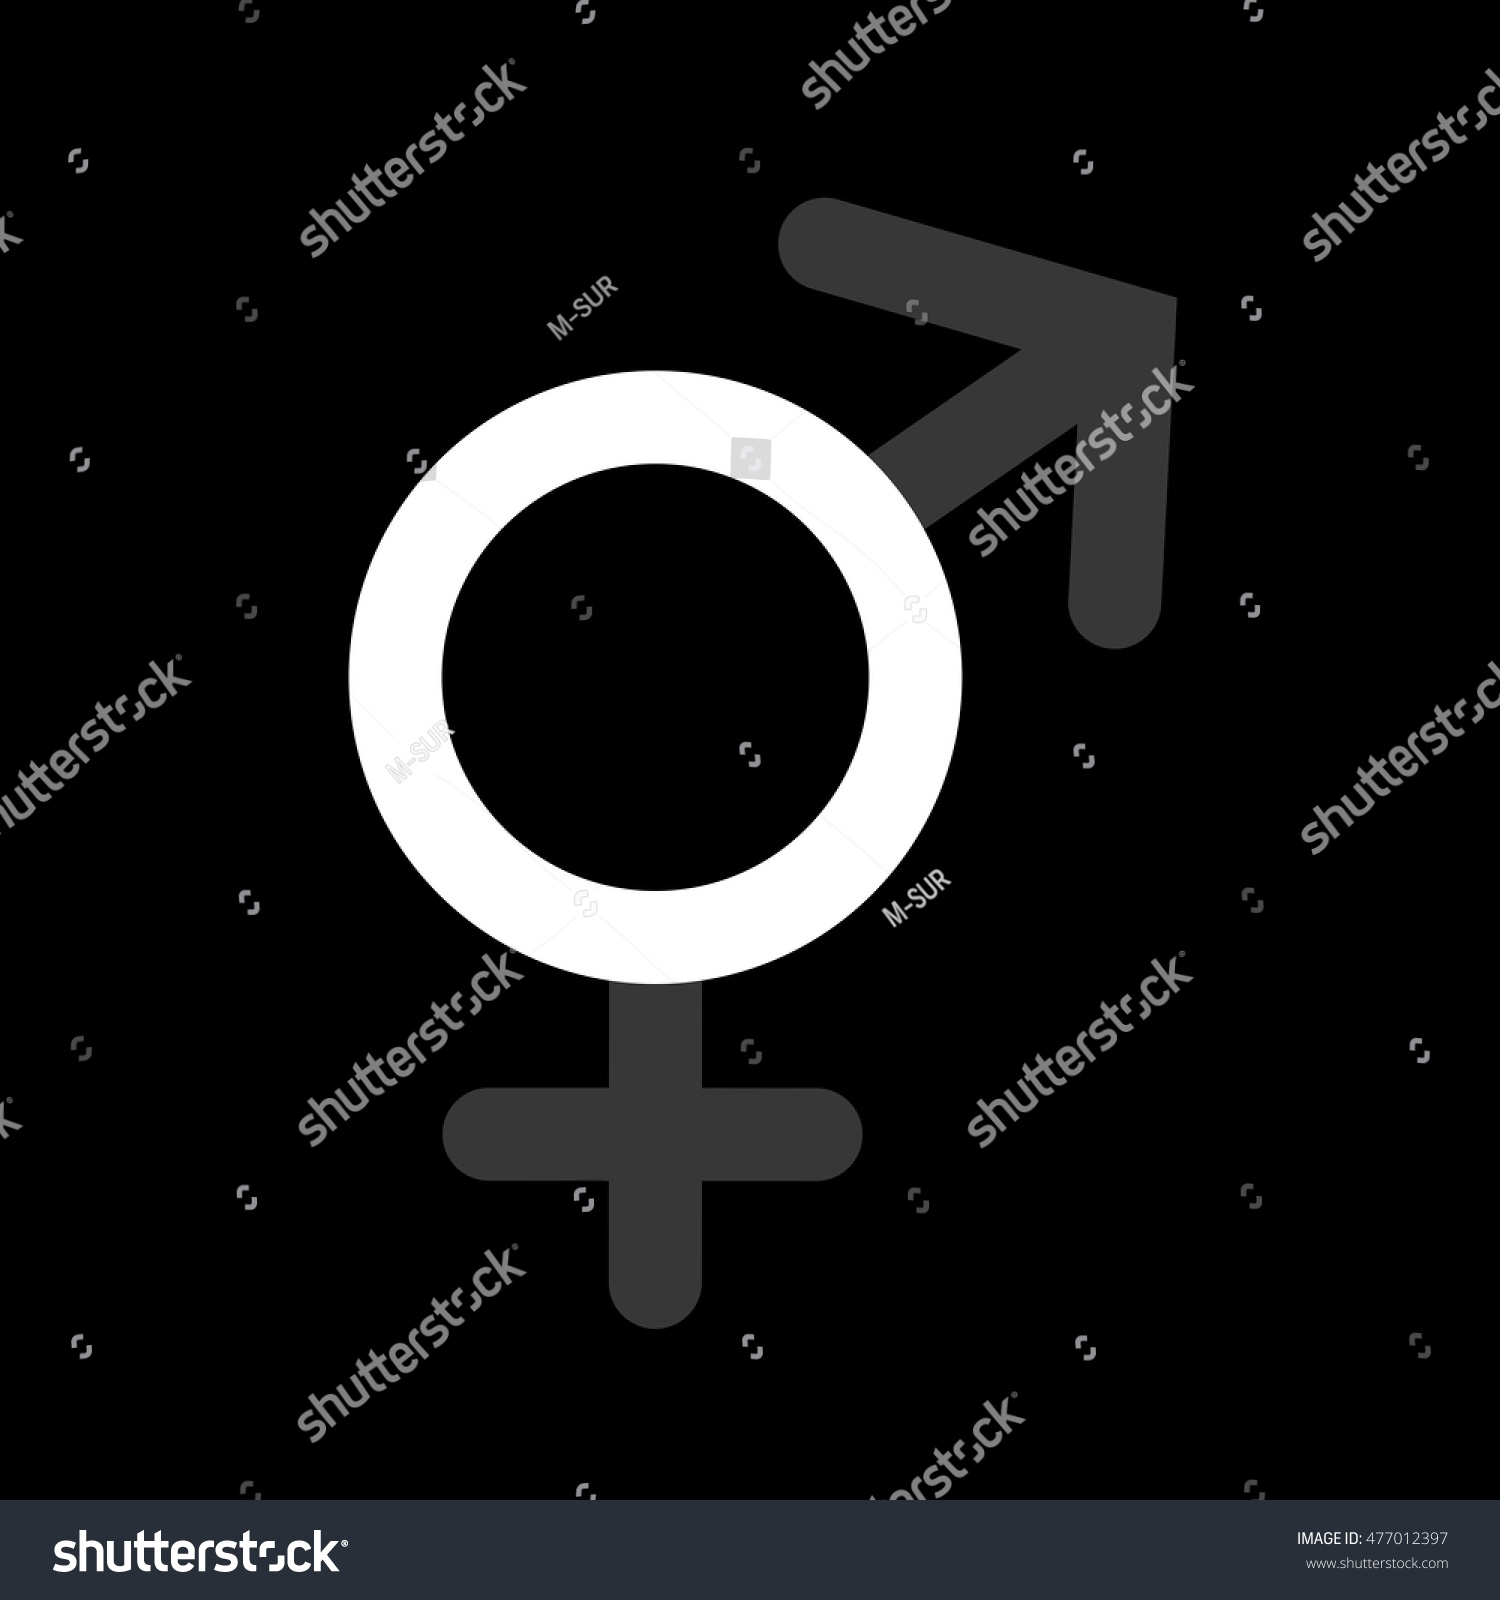 Asexuality Intersex Dark Dull Symbols Male Stock Vector 477012397 Shutterstock